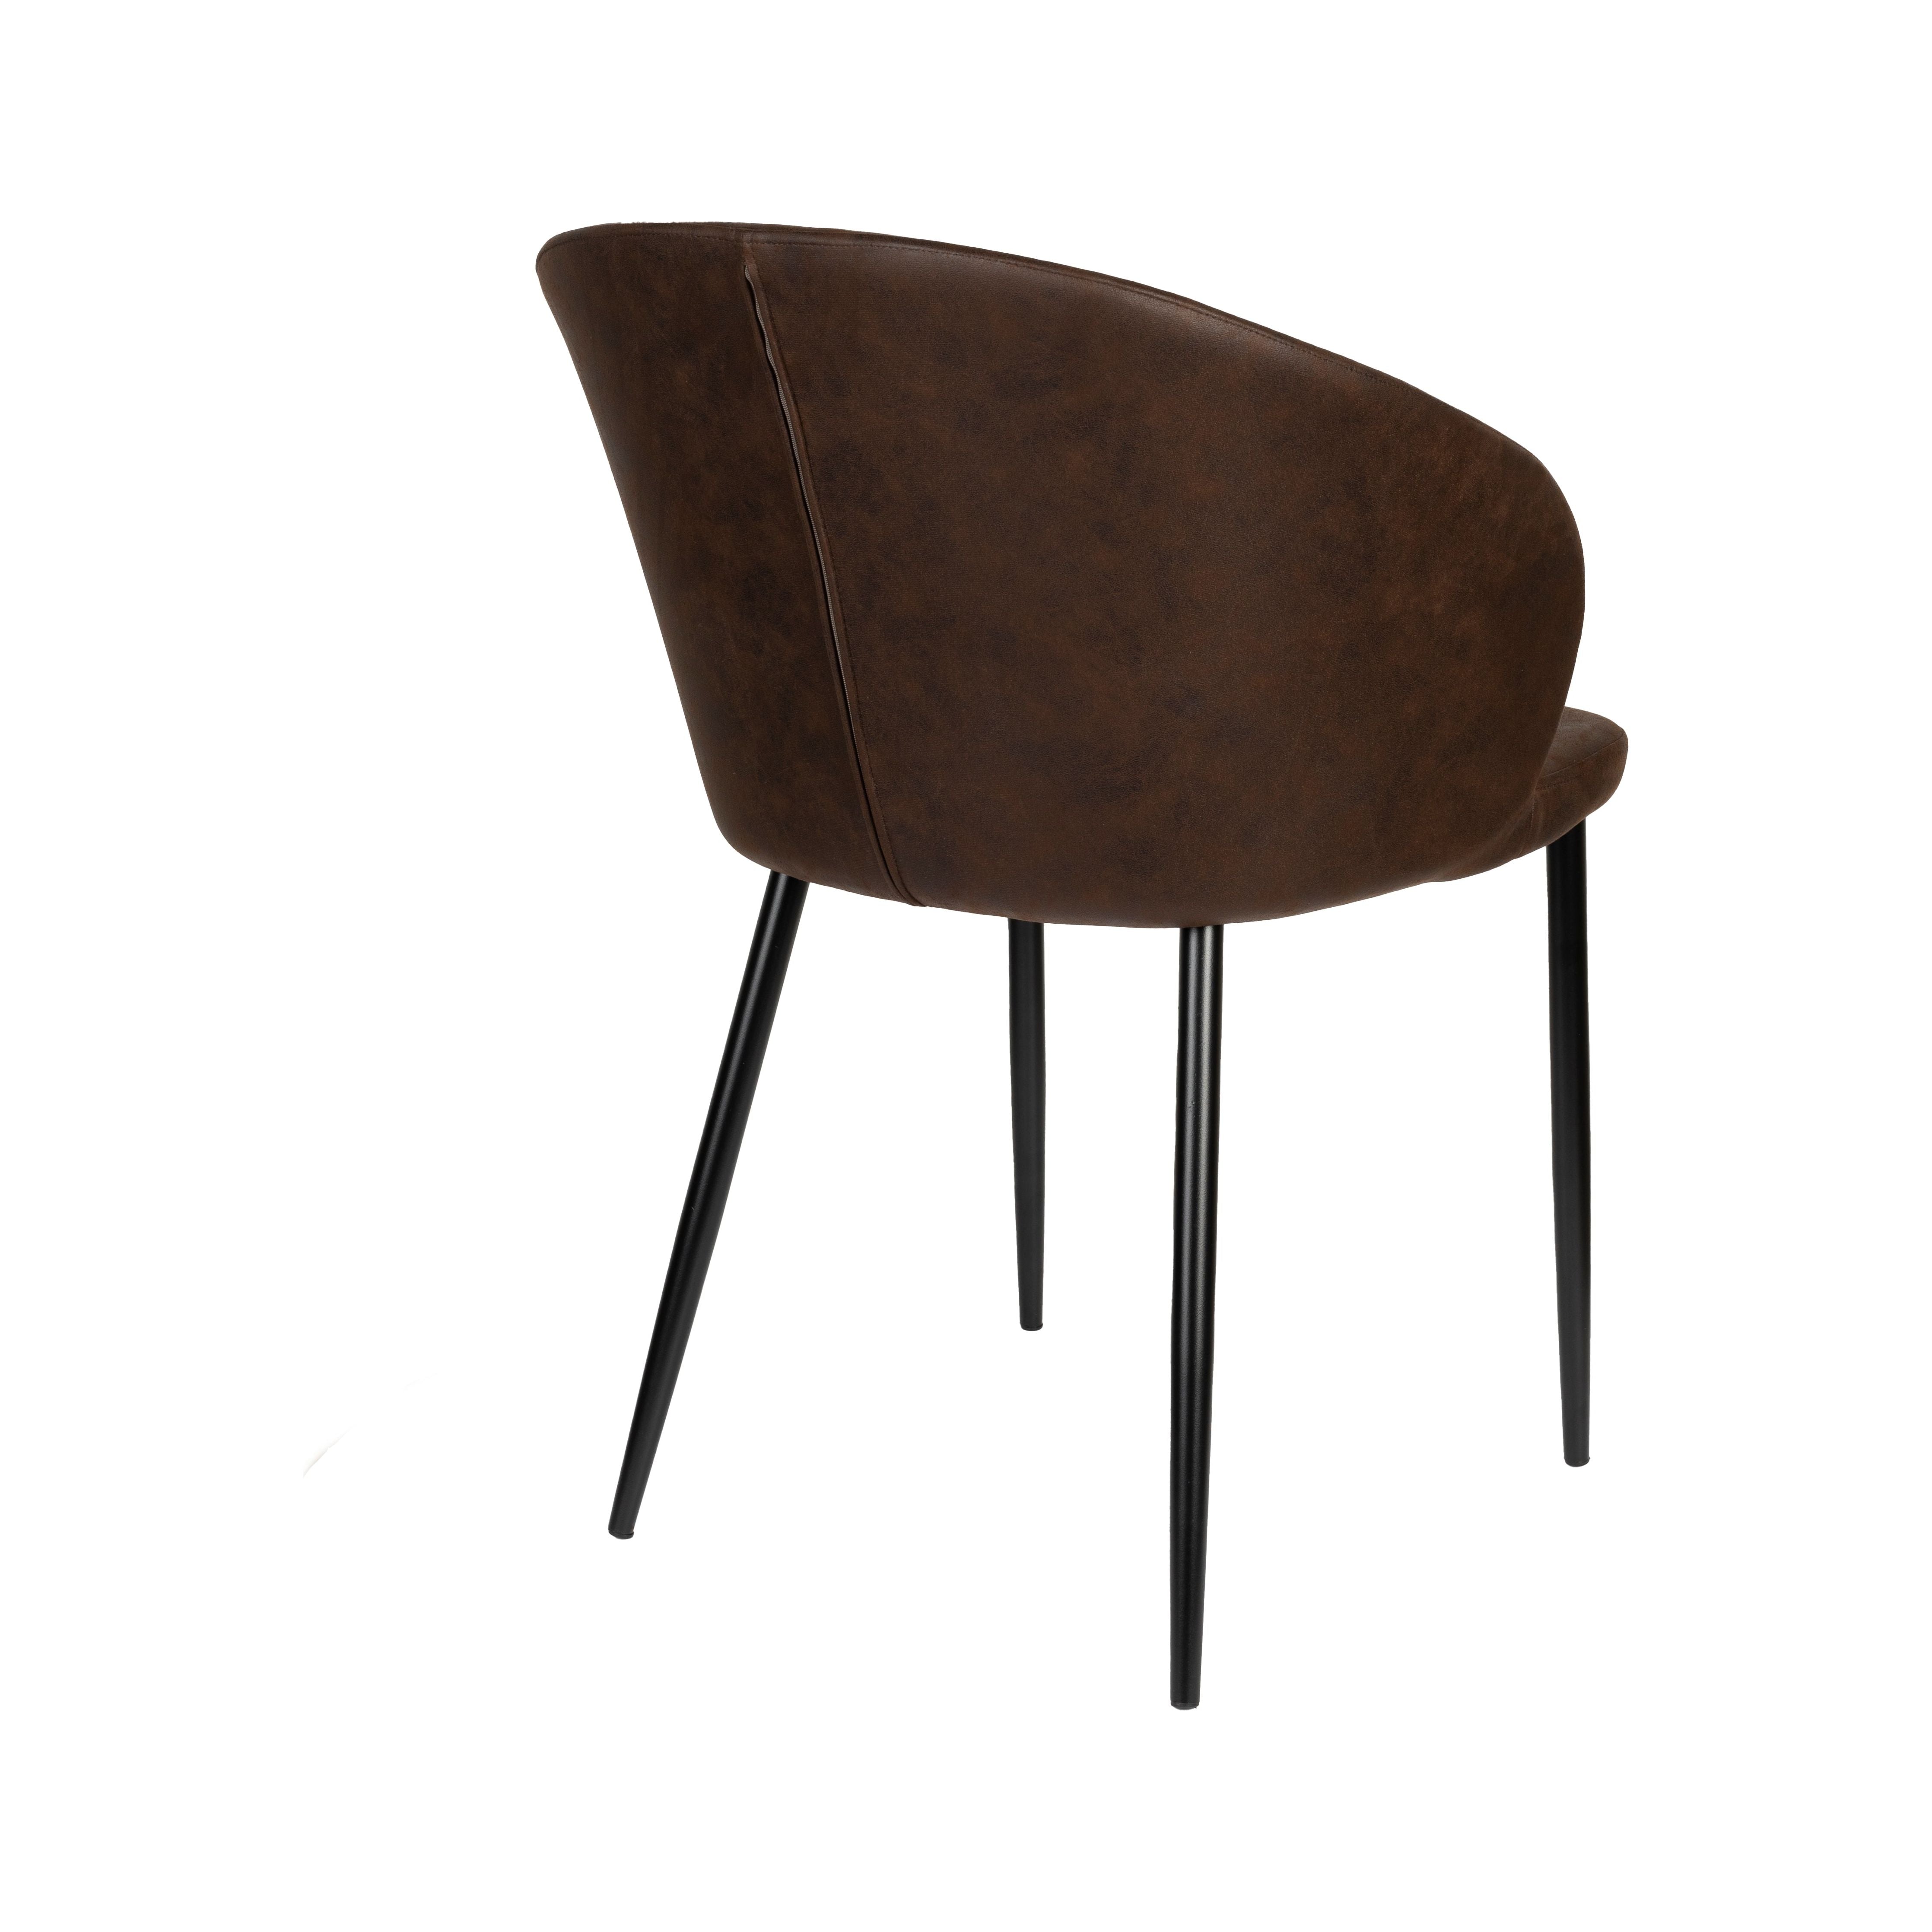 Chair hadid brown